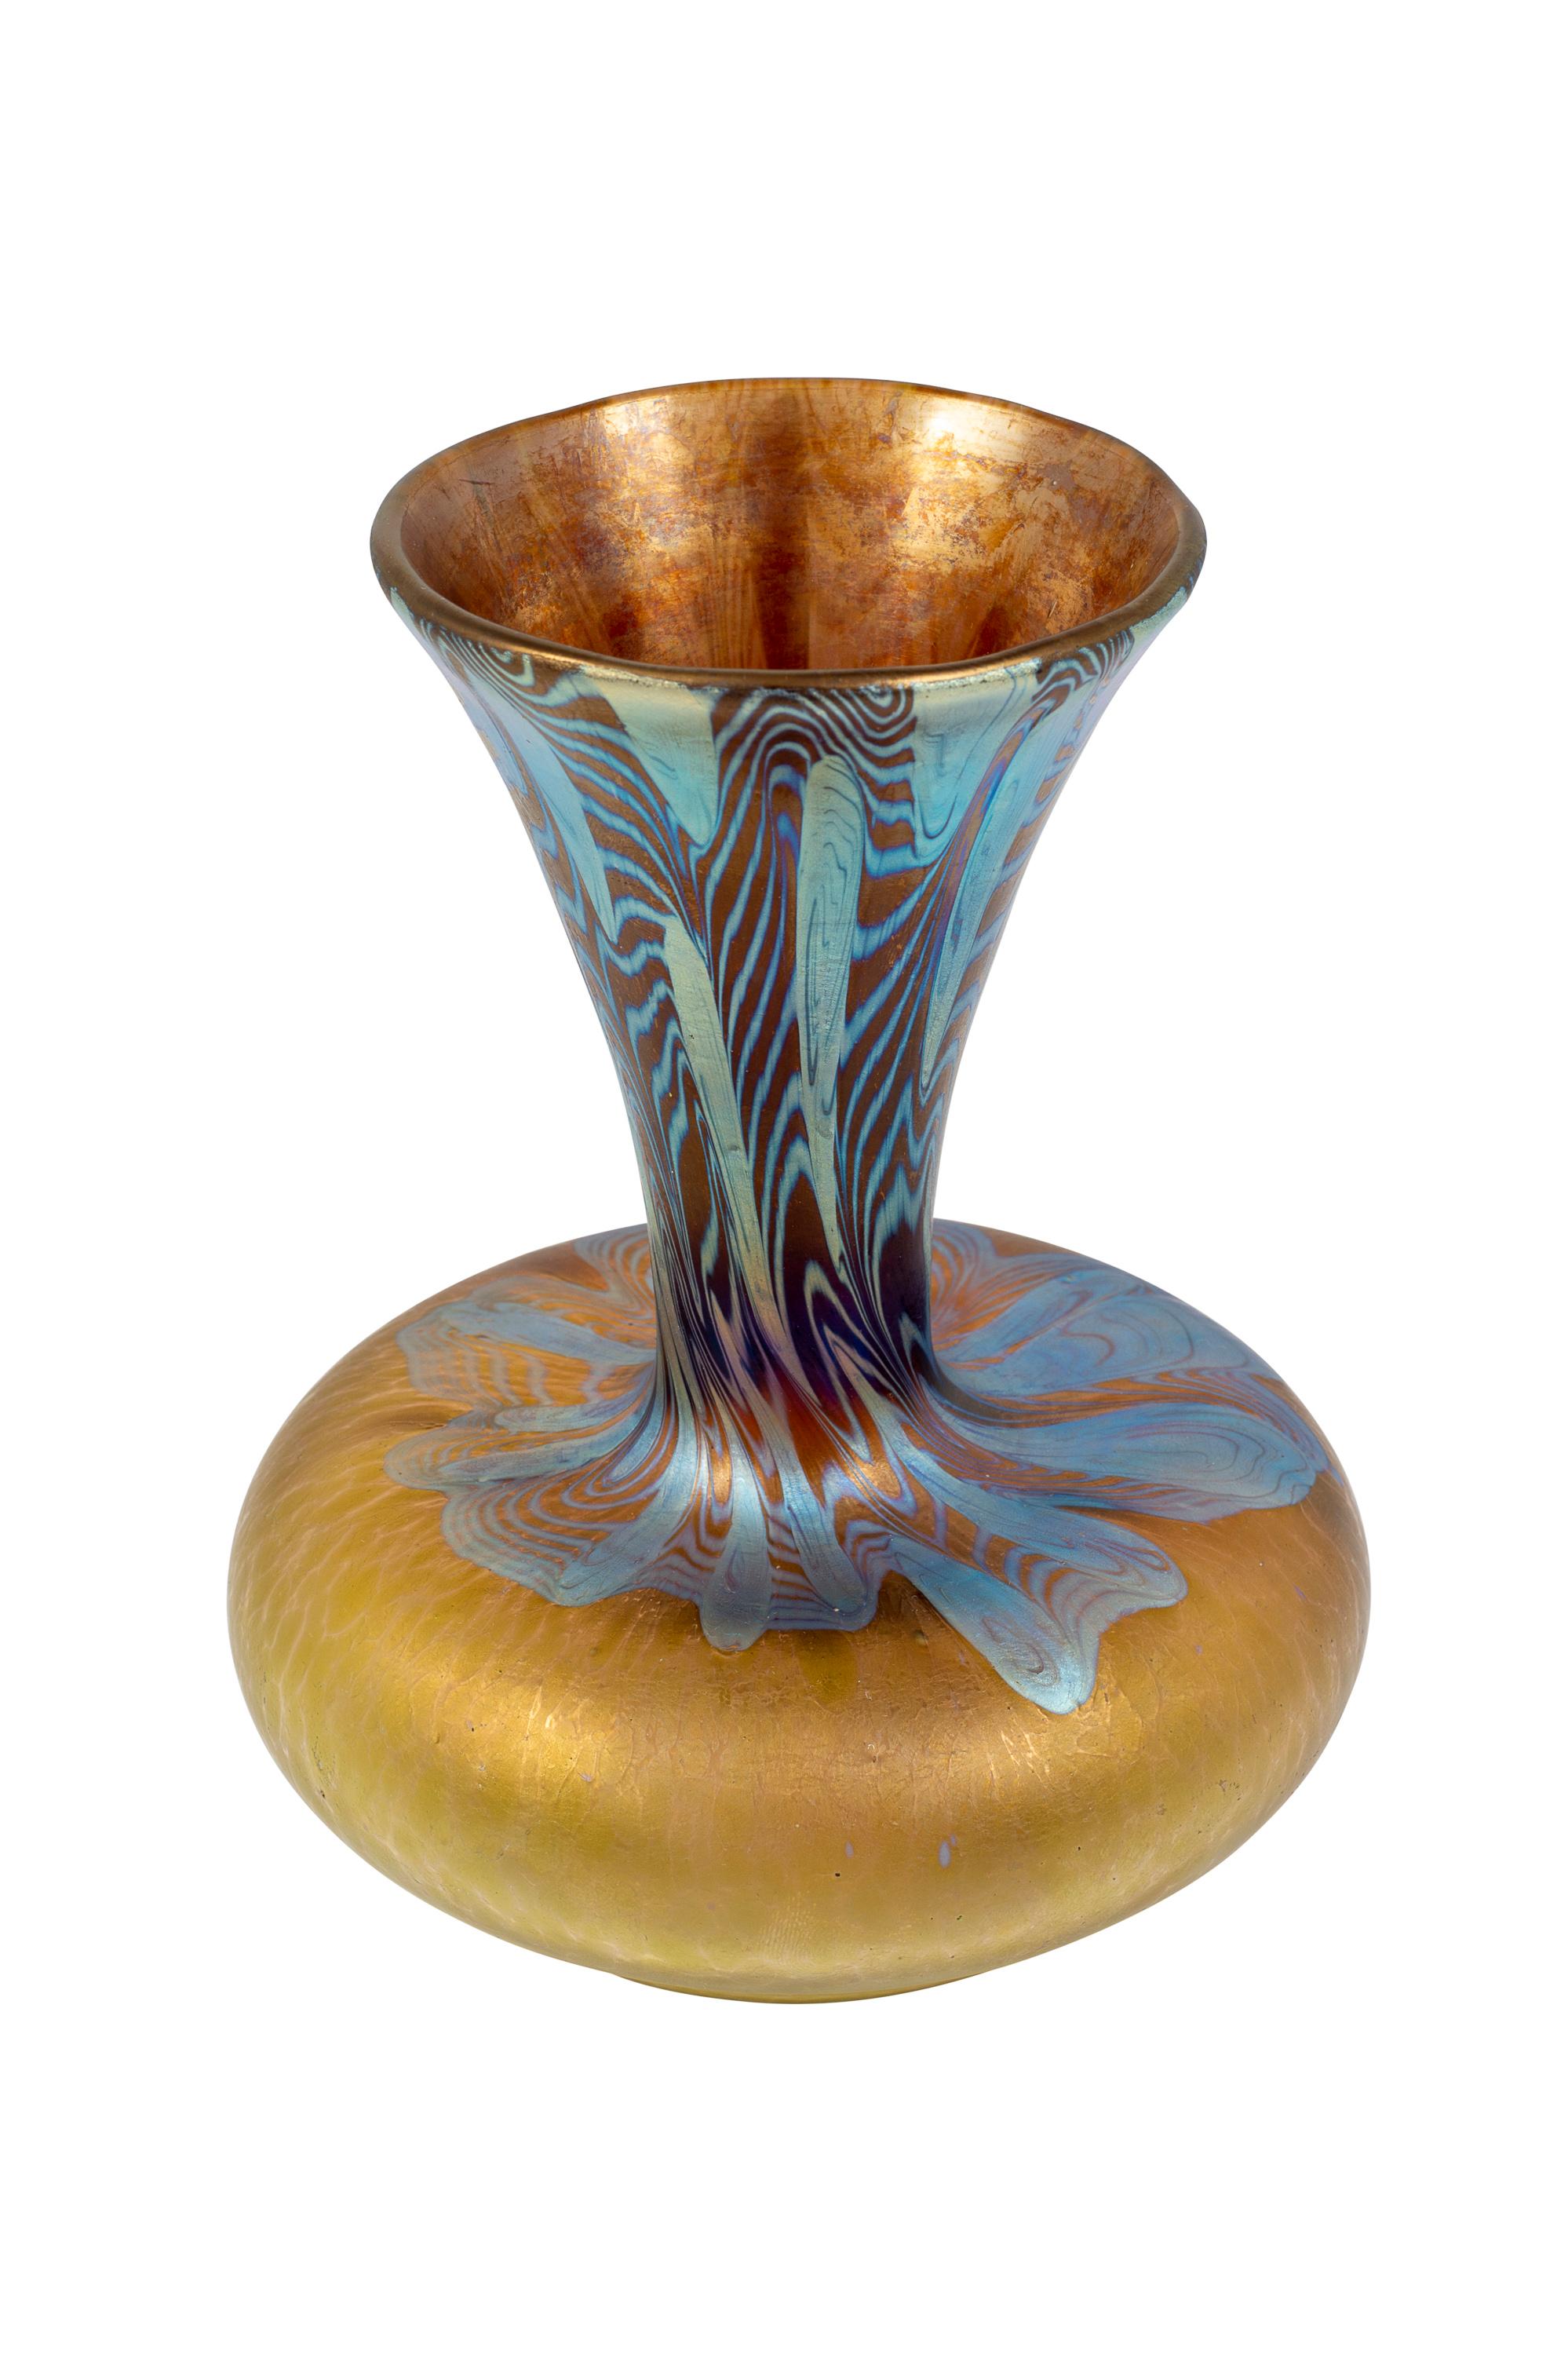 Austrian Jugendstil Johann Loetz Witwe mouth-blown glass vase Dekor Argus, circa 1902

The 